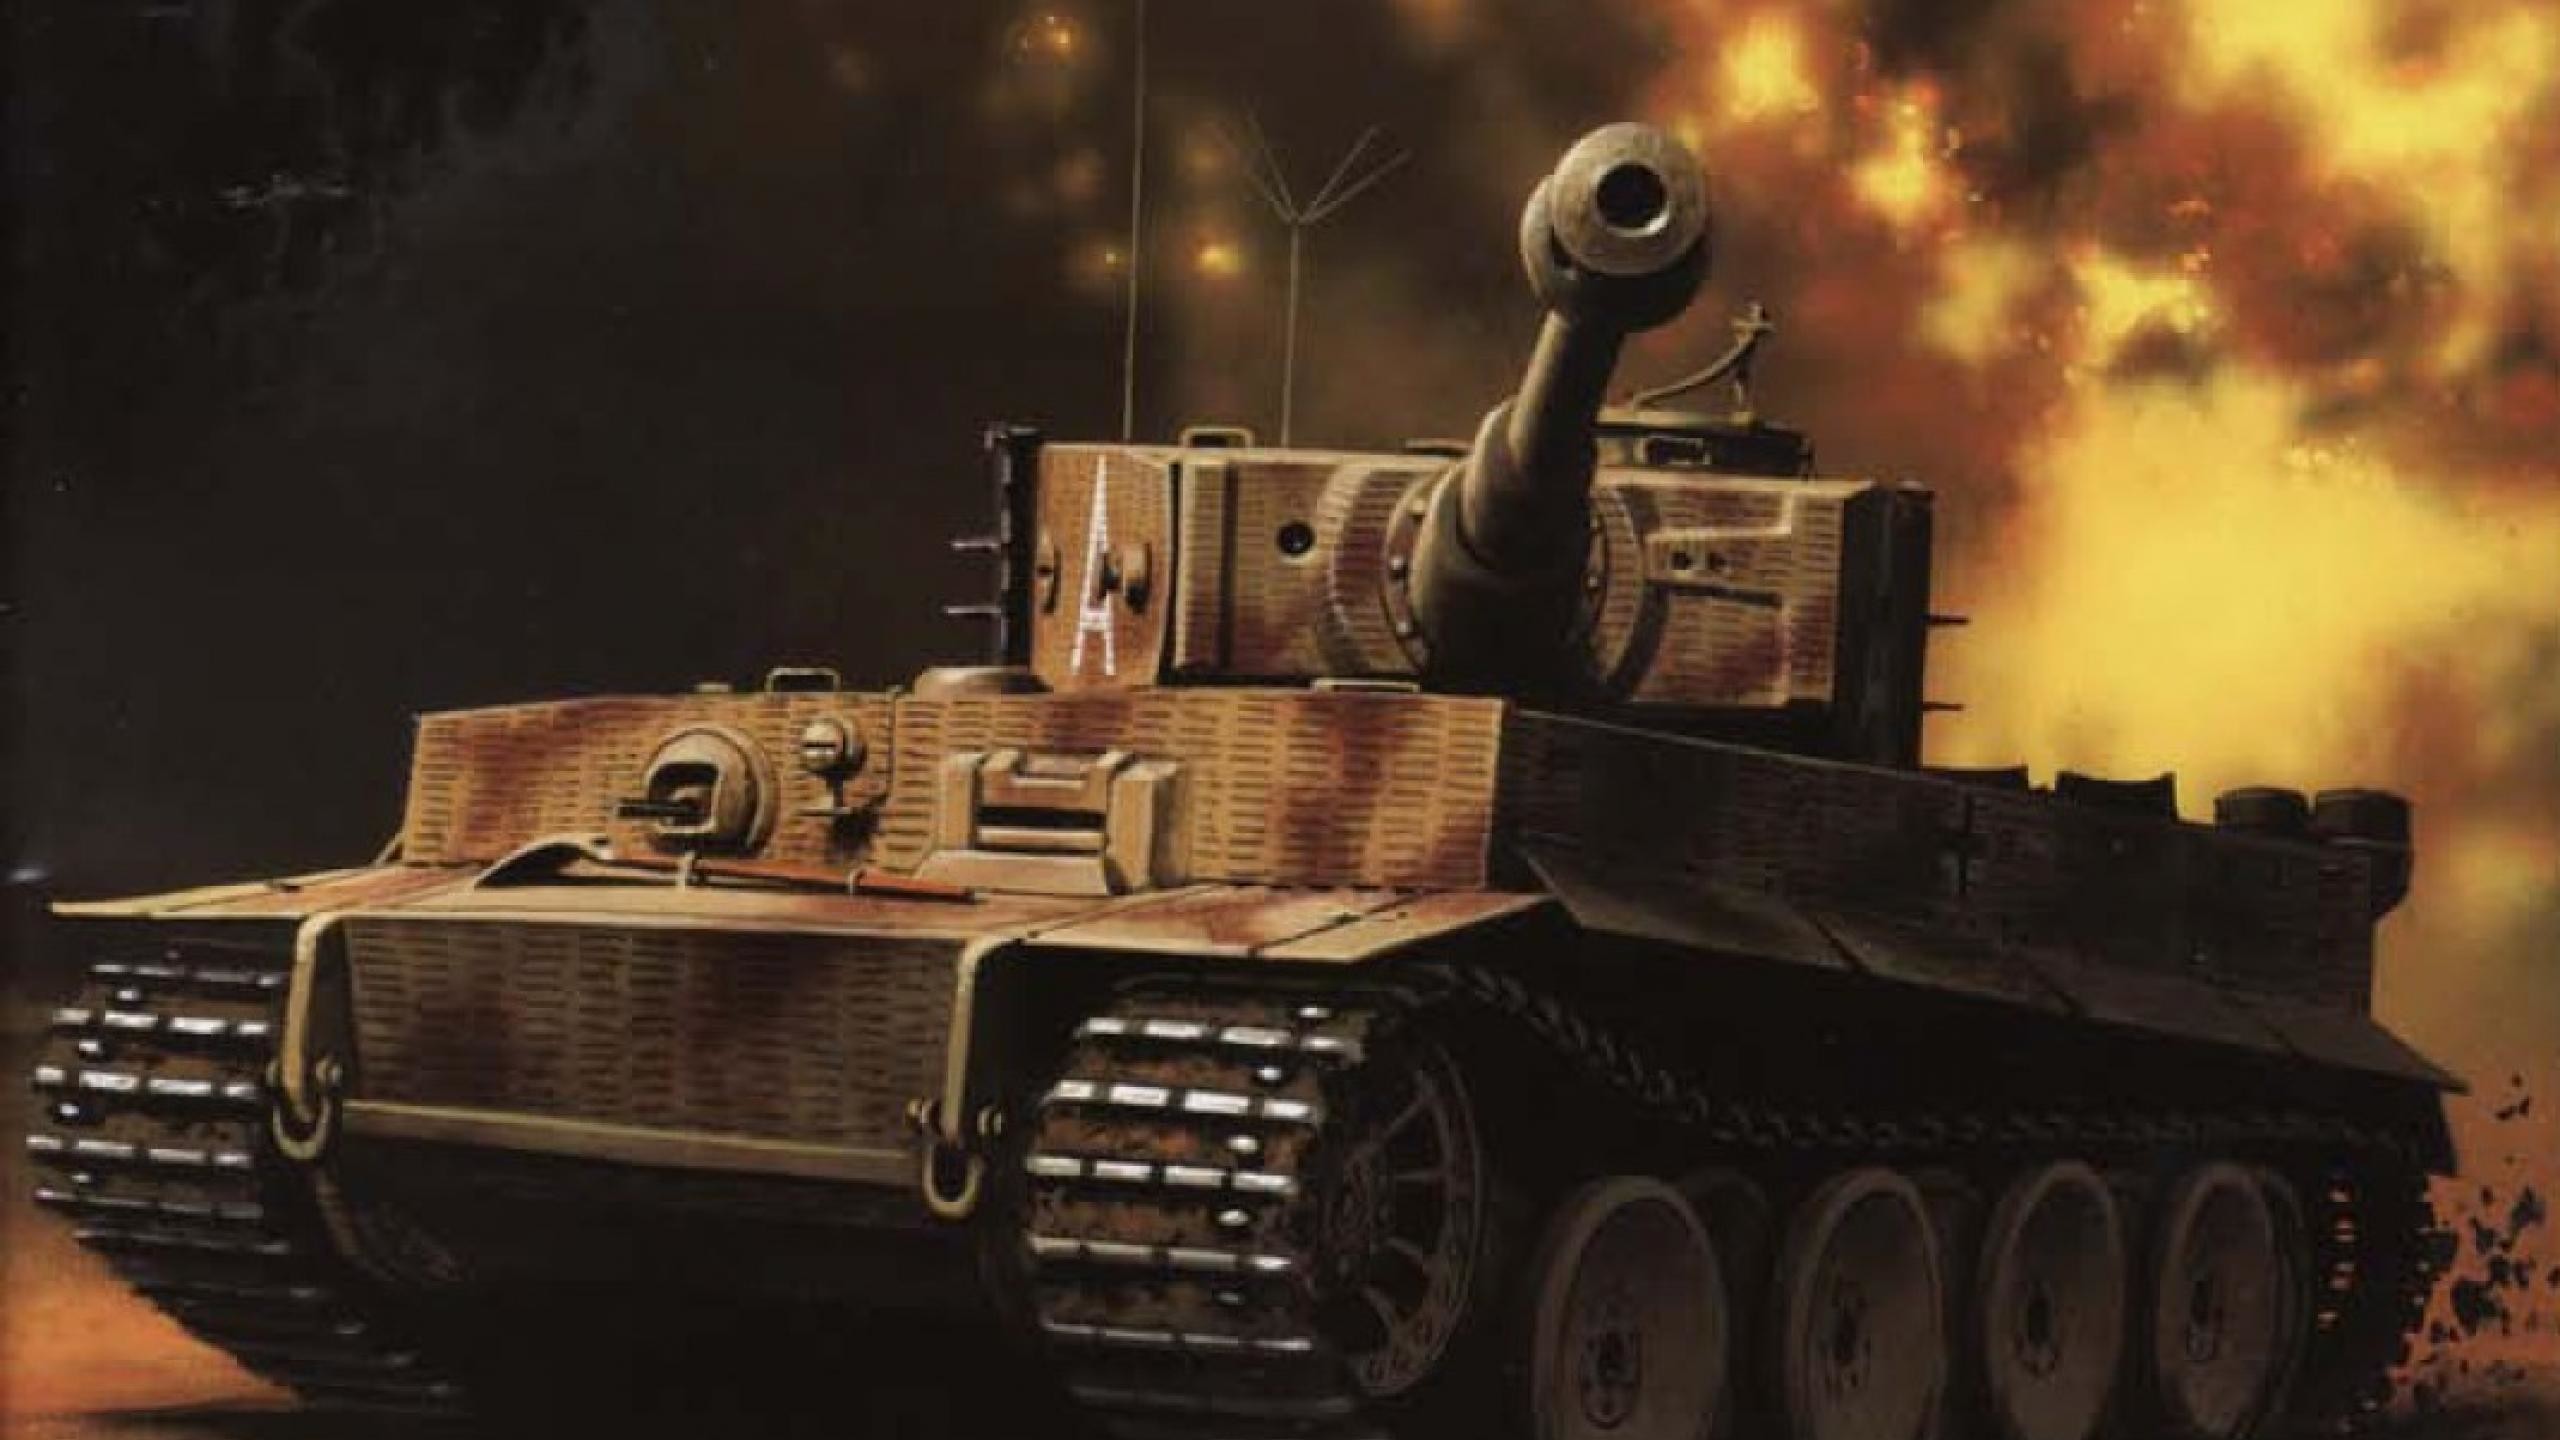 2560x1440 Tiger Tank Wallpaper Photos 12533 - Amazing Wallpaperz